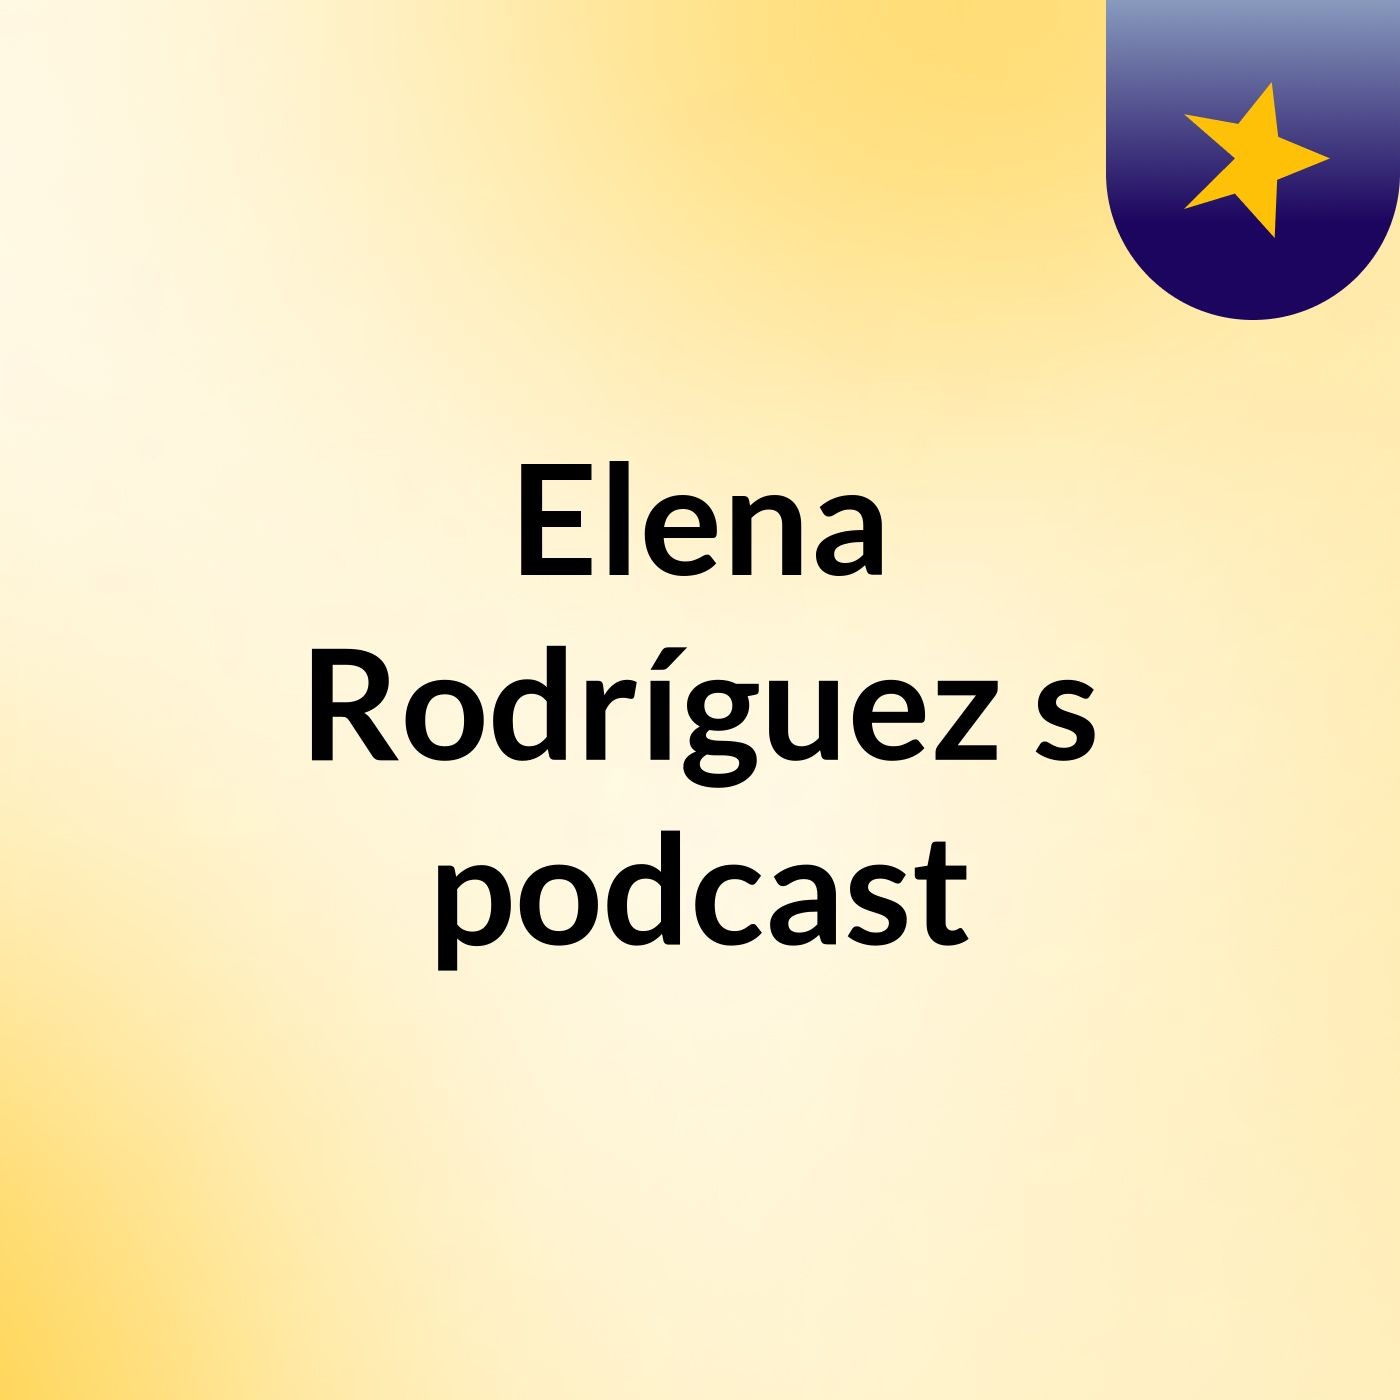 Elena Rodríguez's podcast